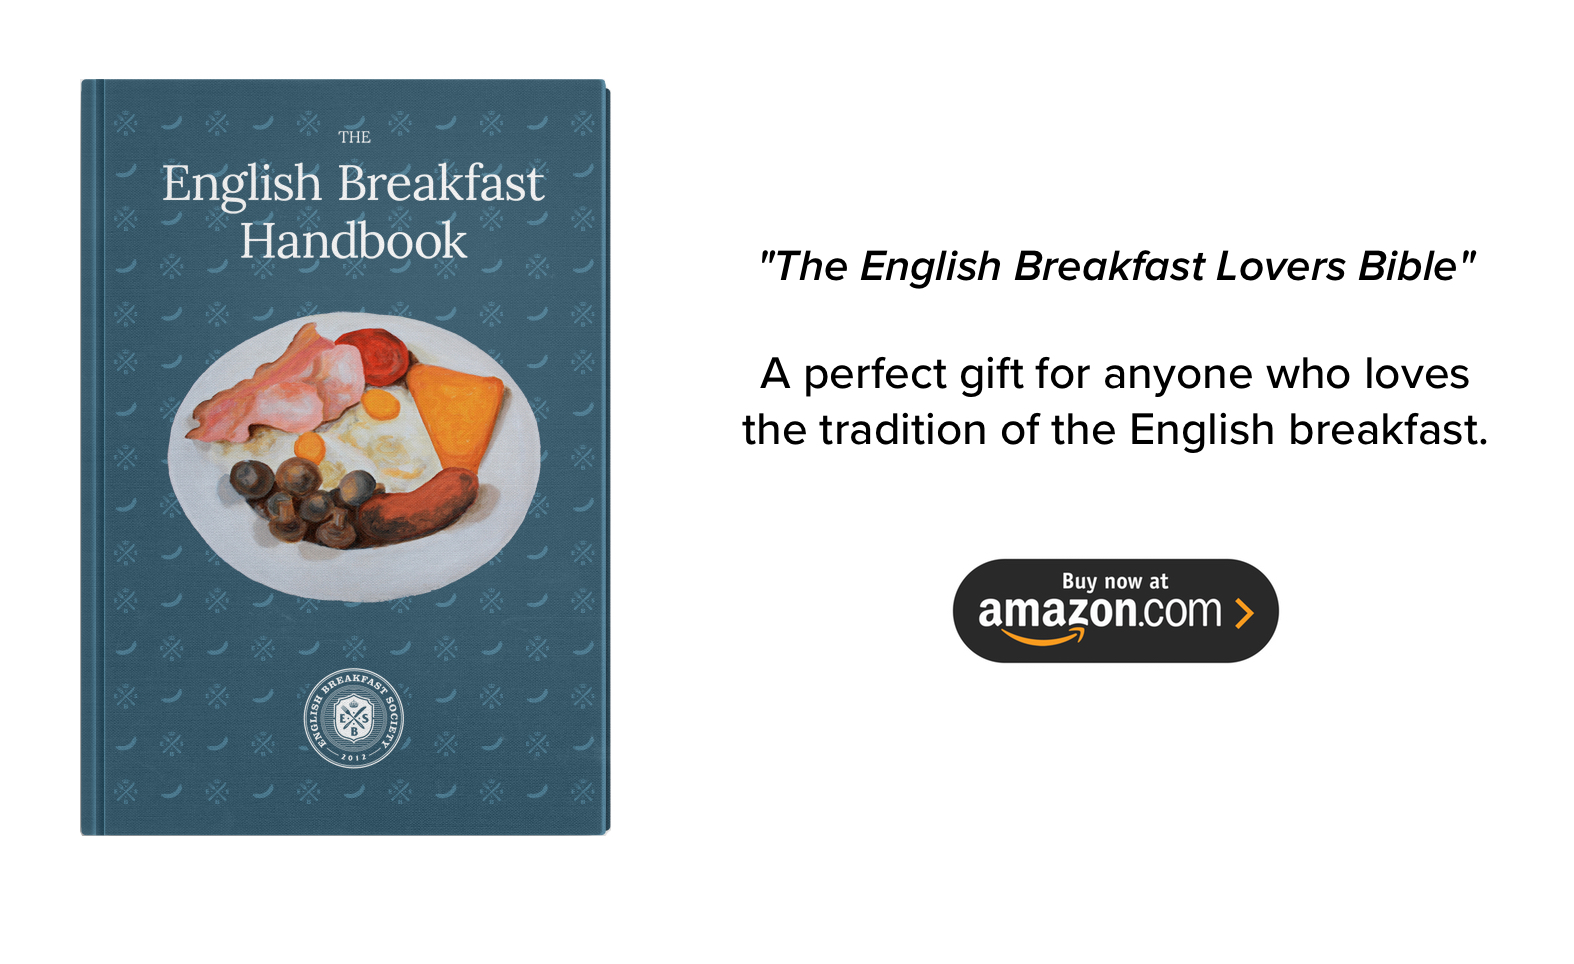 Click here to buy the English Breakfast Handbook!